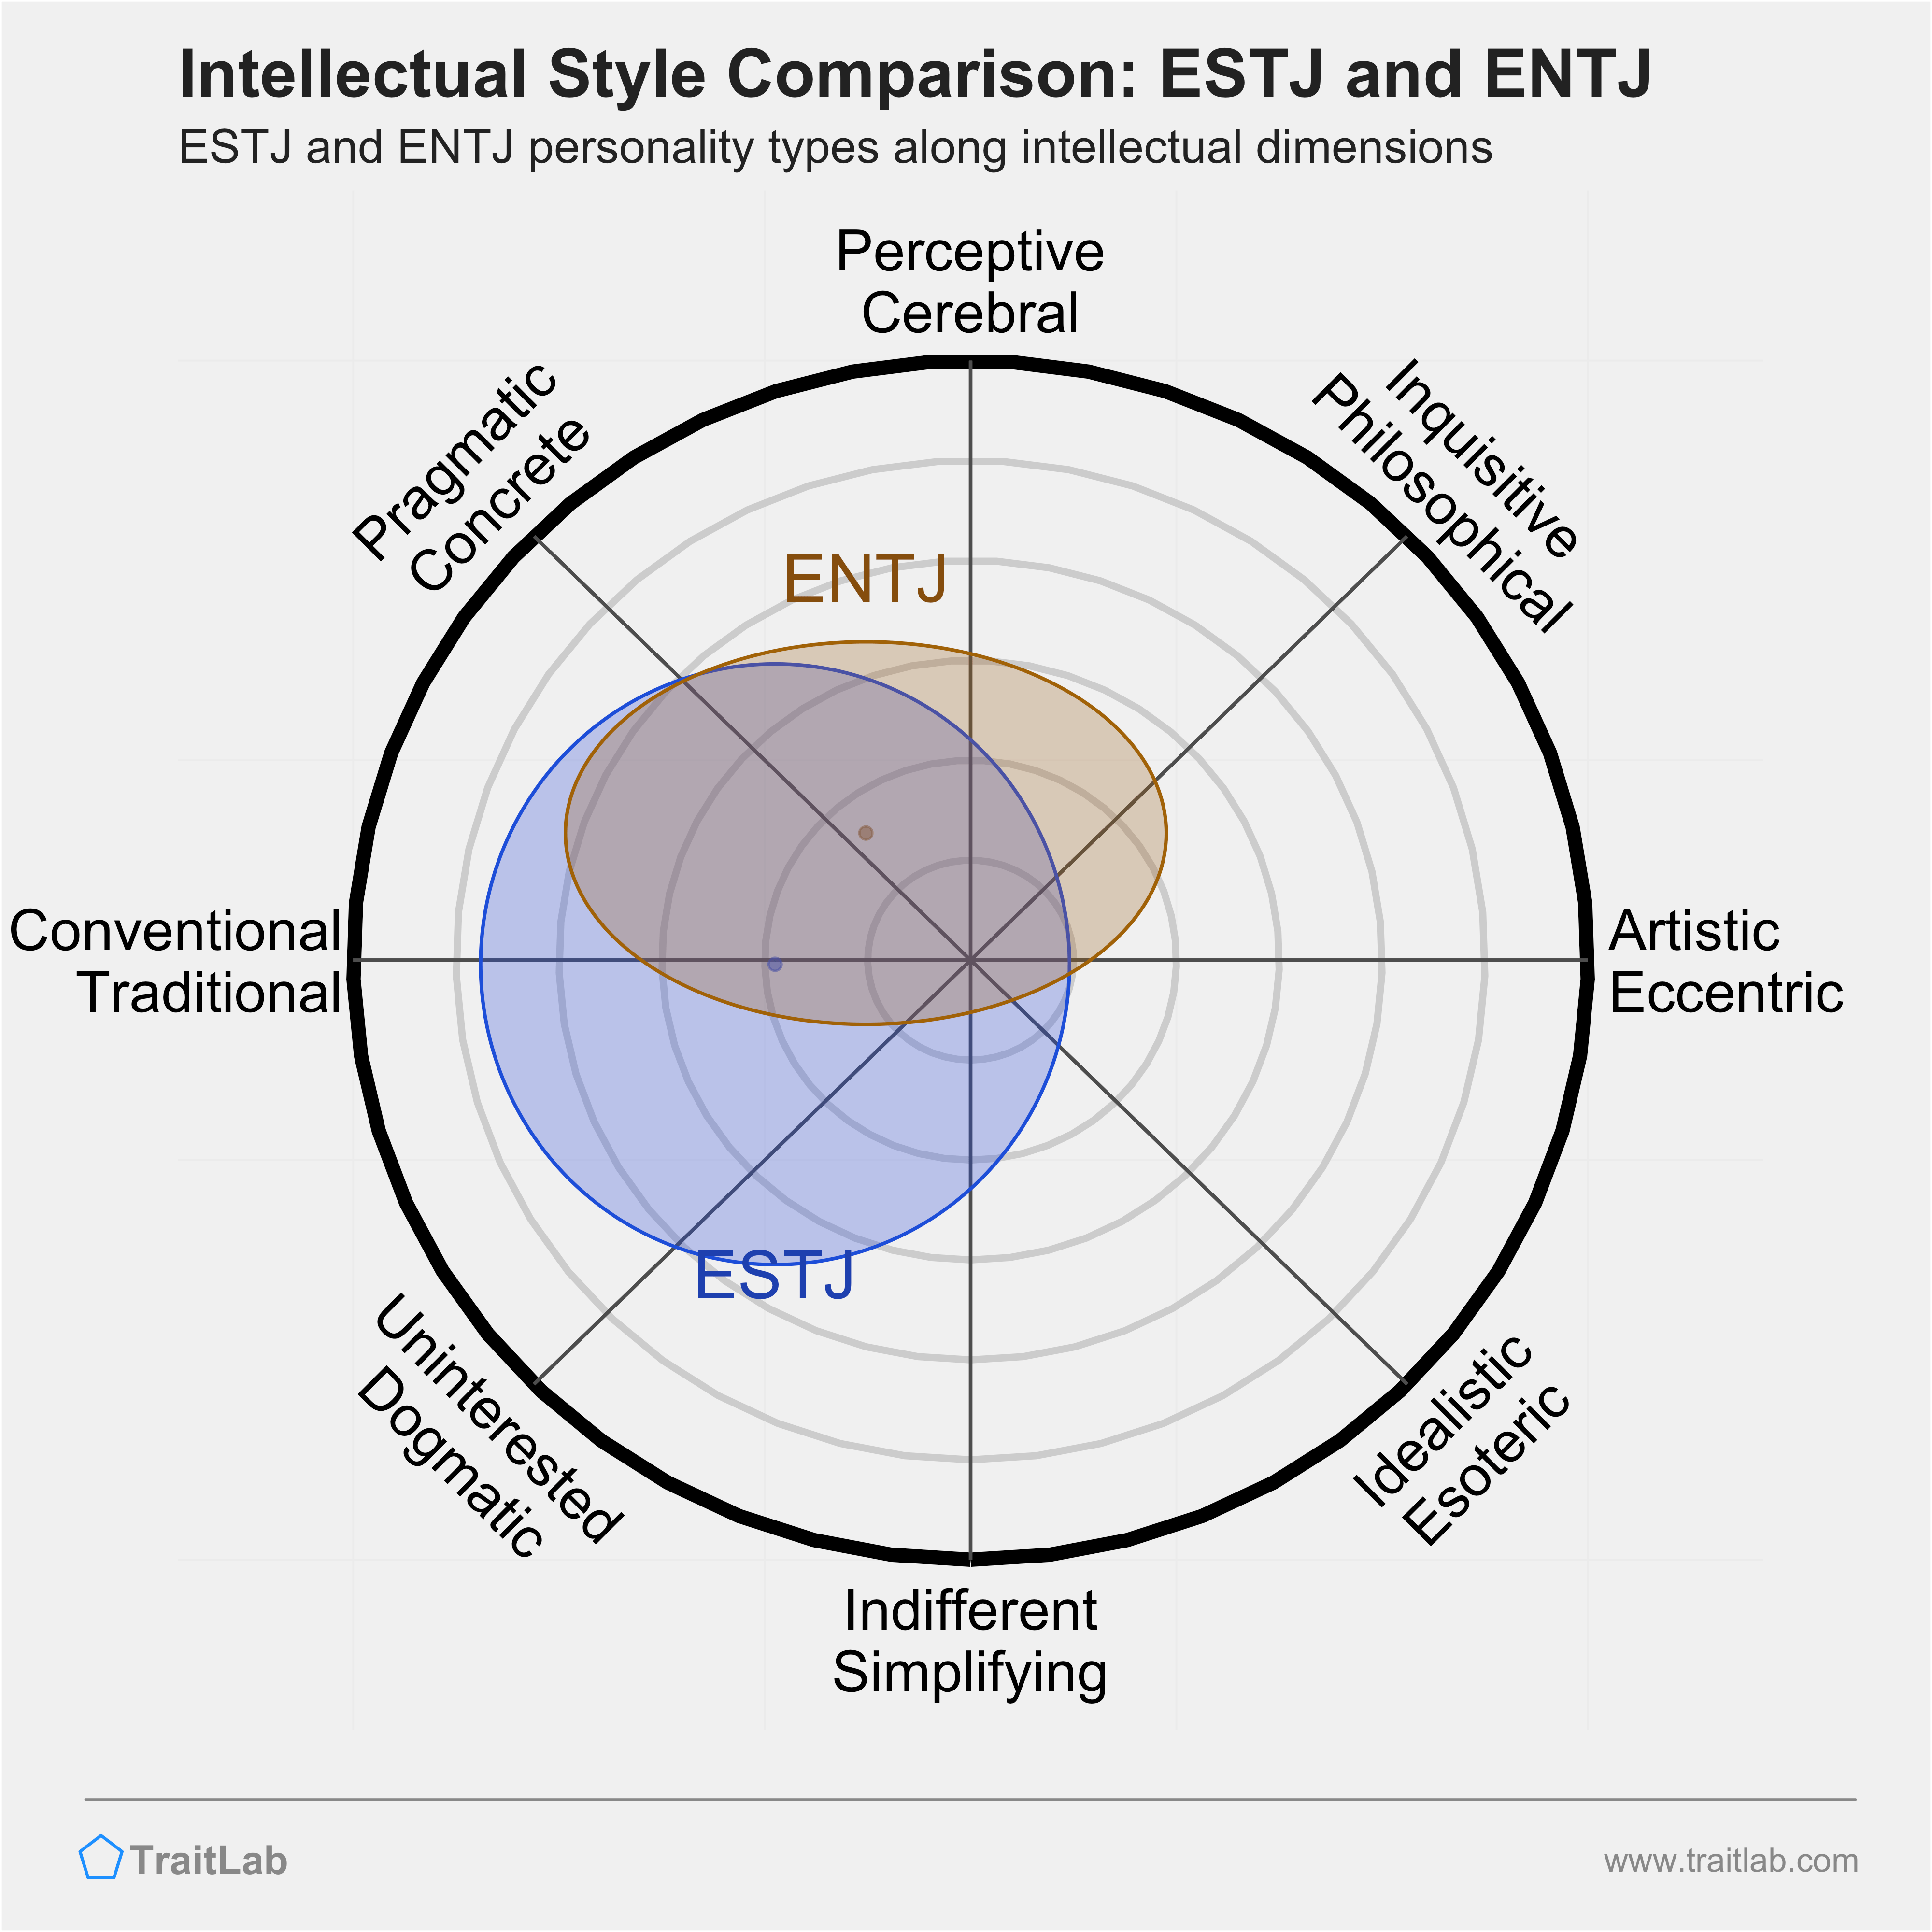 ESTJ and ENTJ comparison across intellectual dimensions